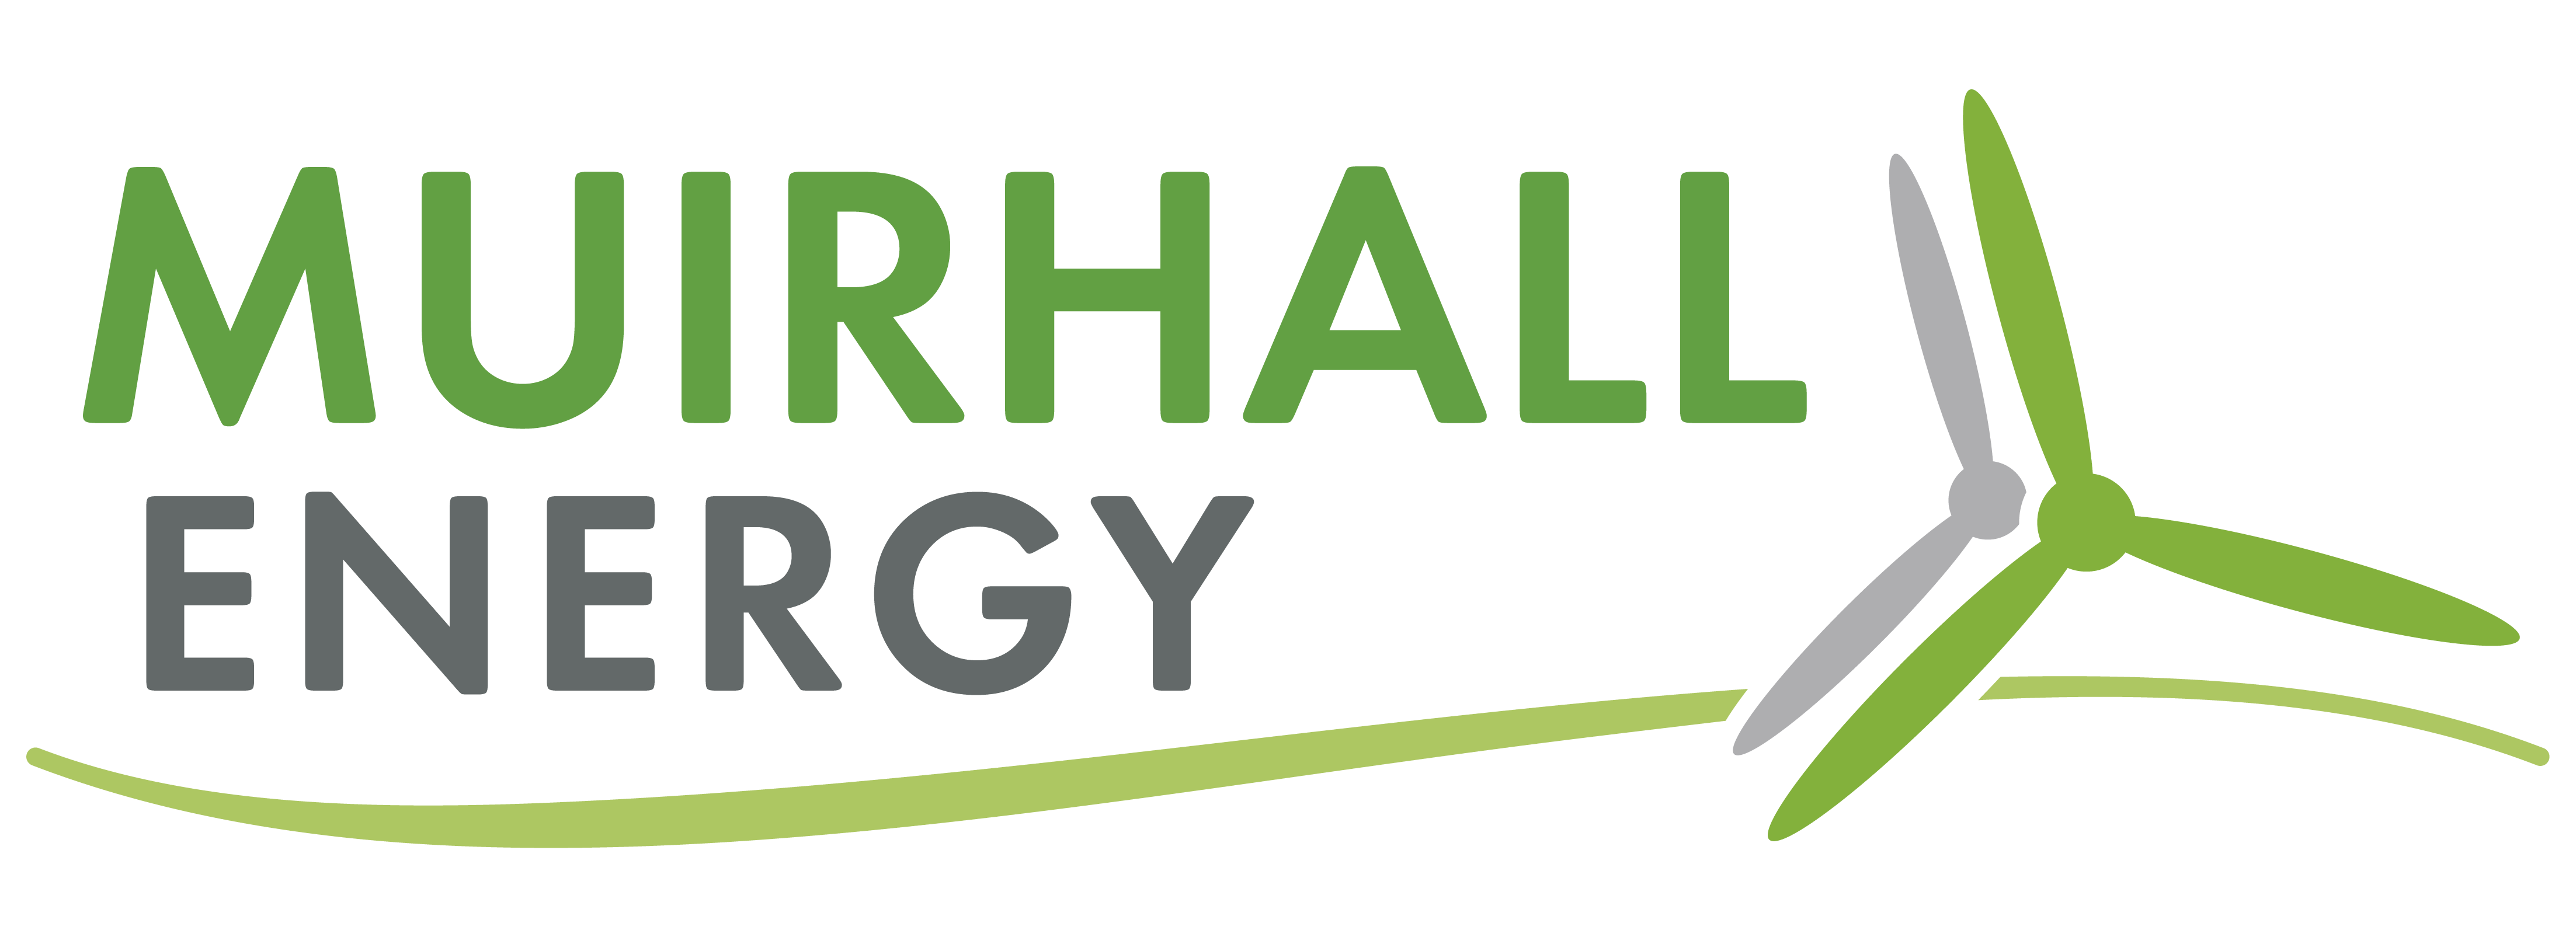 Muirhall Energy Logo - Full Colour RGB